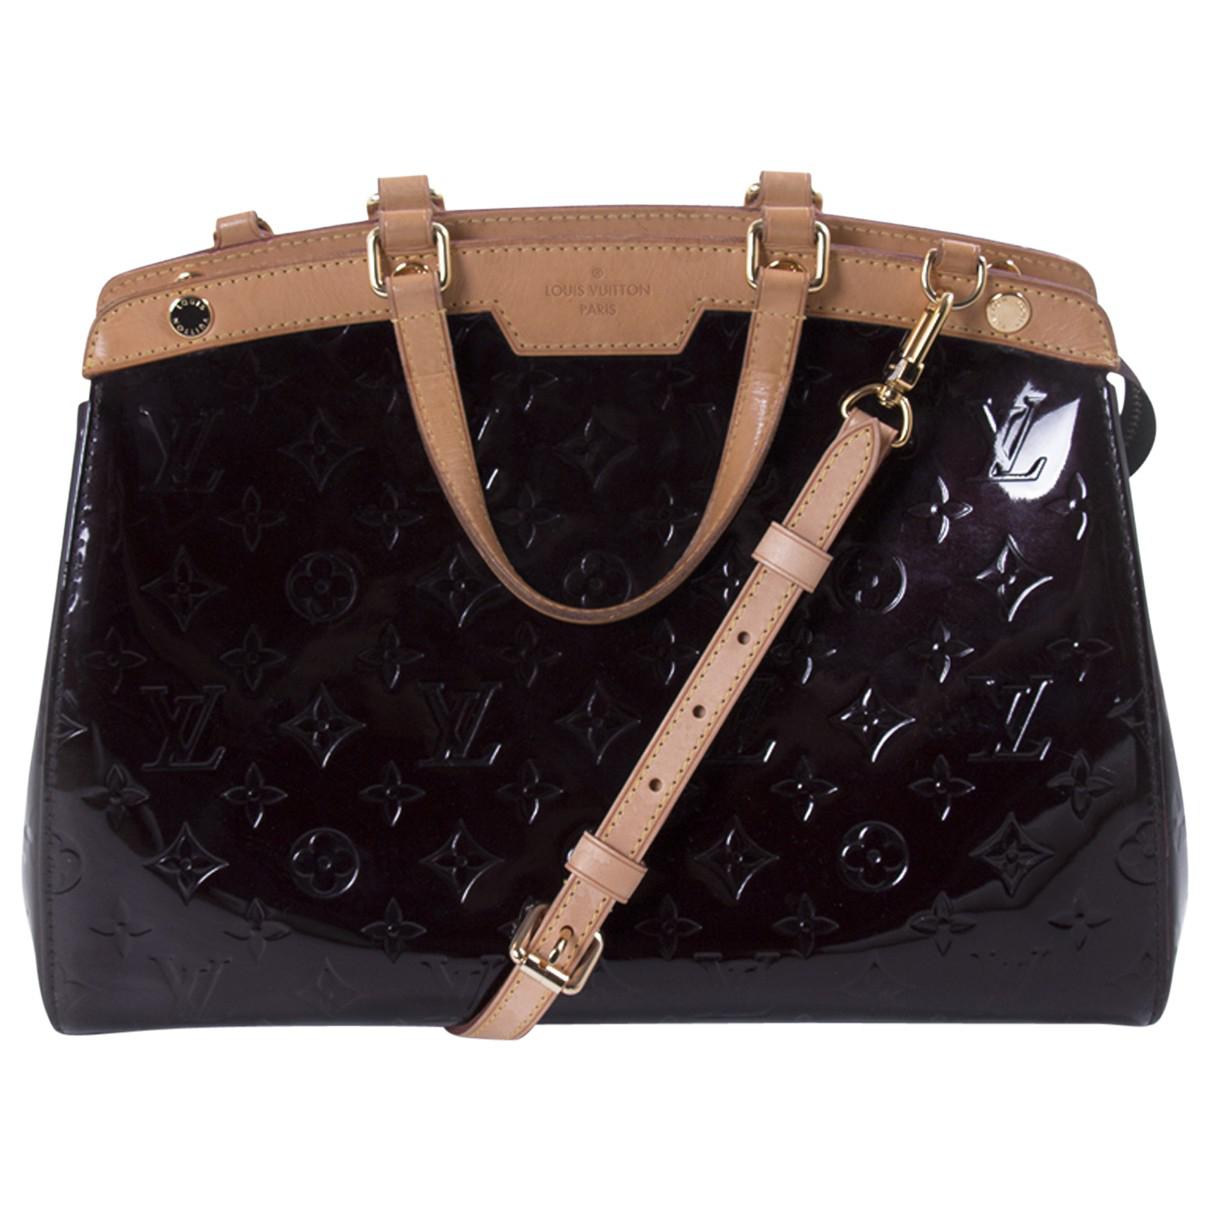 Louis Vuitton Patent Leather Handbag in Burgundy (Black) - Lyst